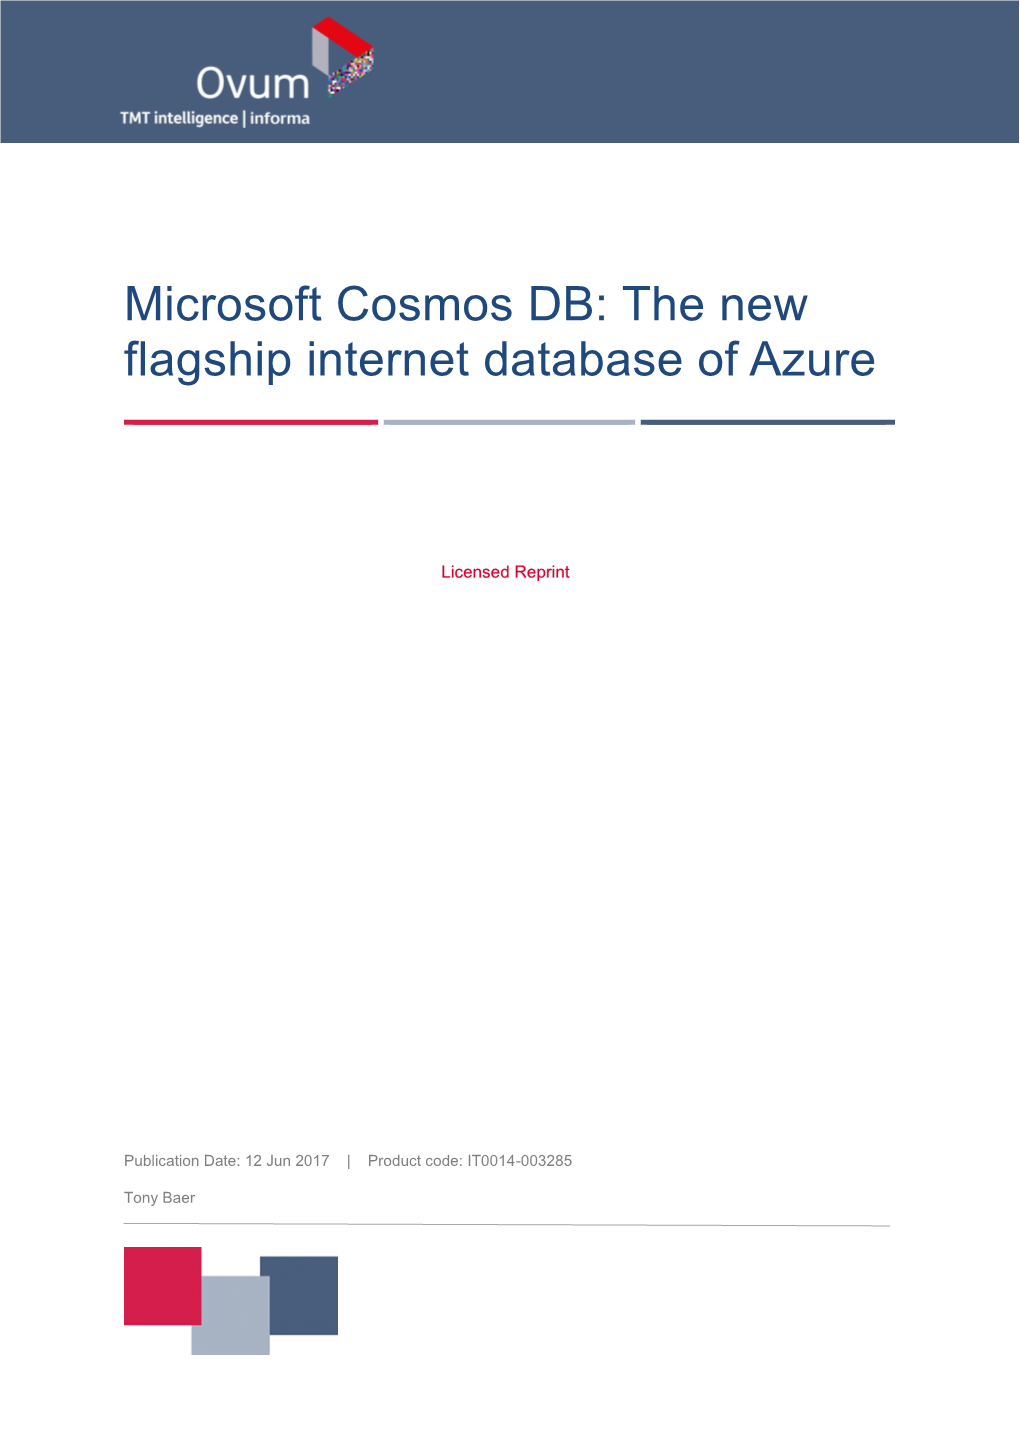 Microsoft Cosmos DB: the New Flagship Internet Database of Azure